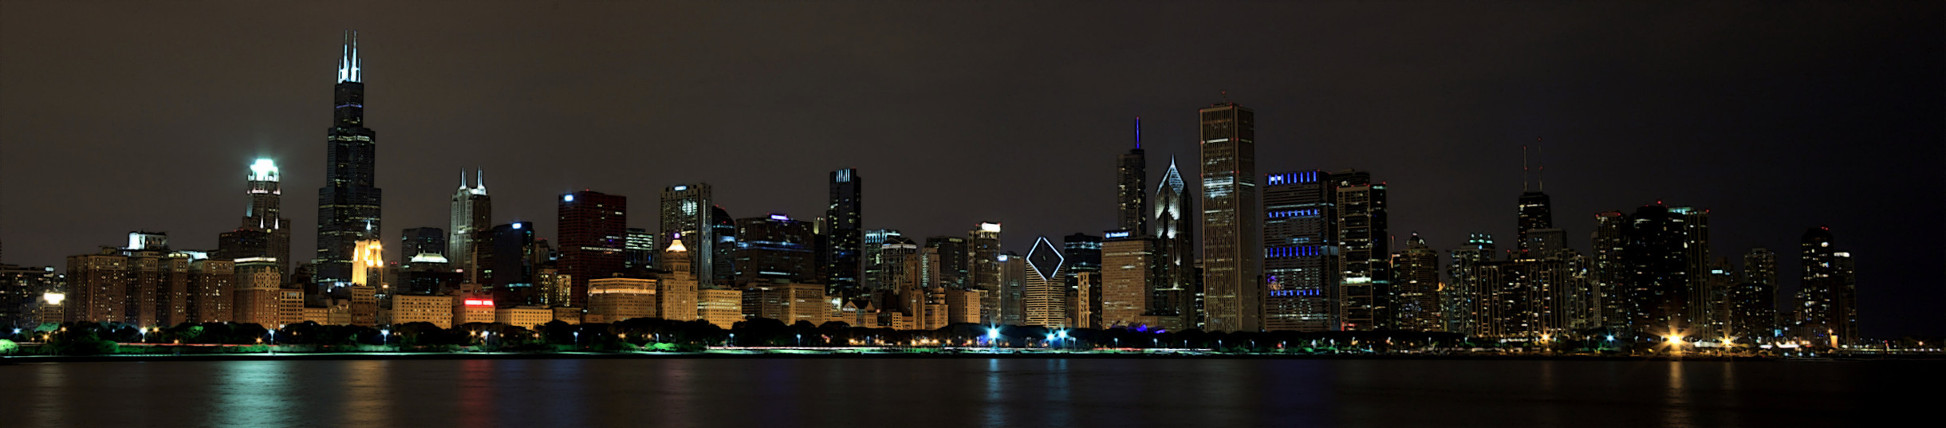 Chicago skyline night.jpg